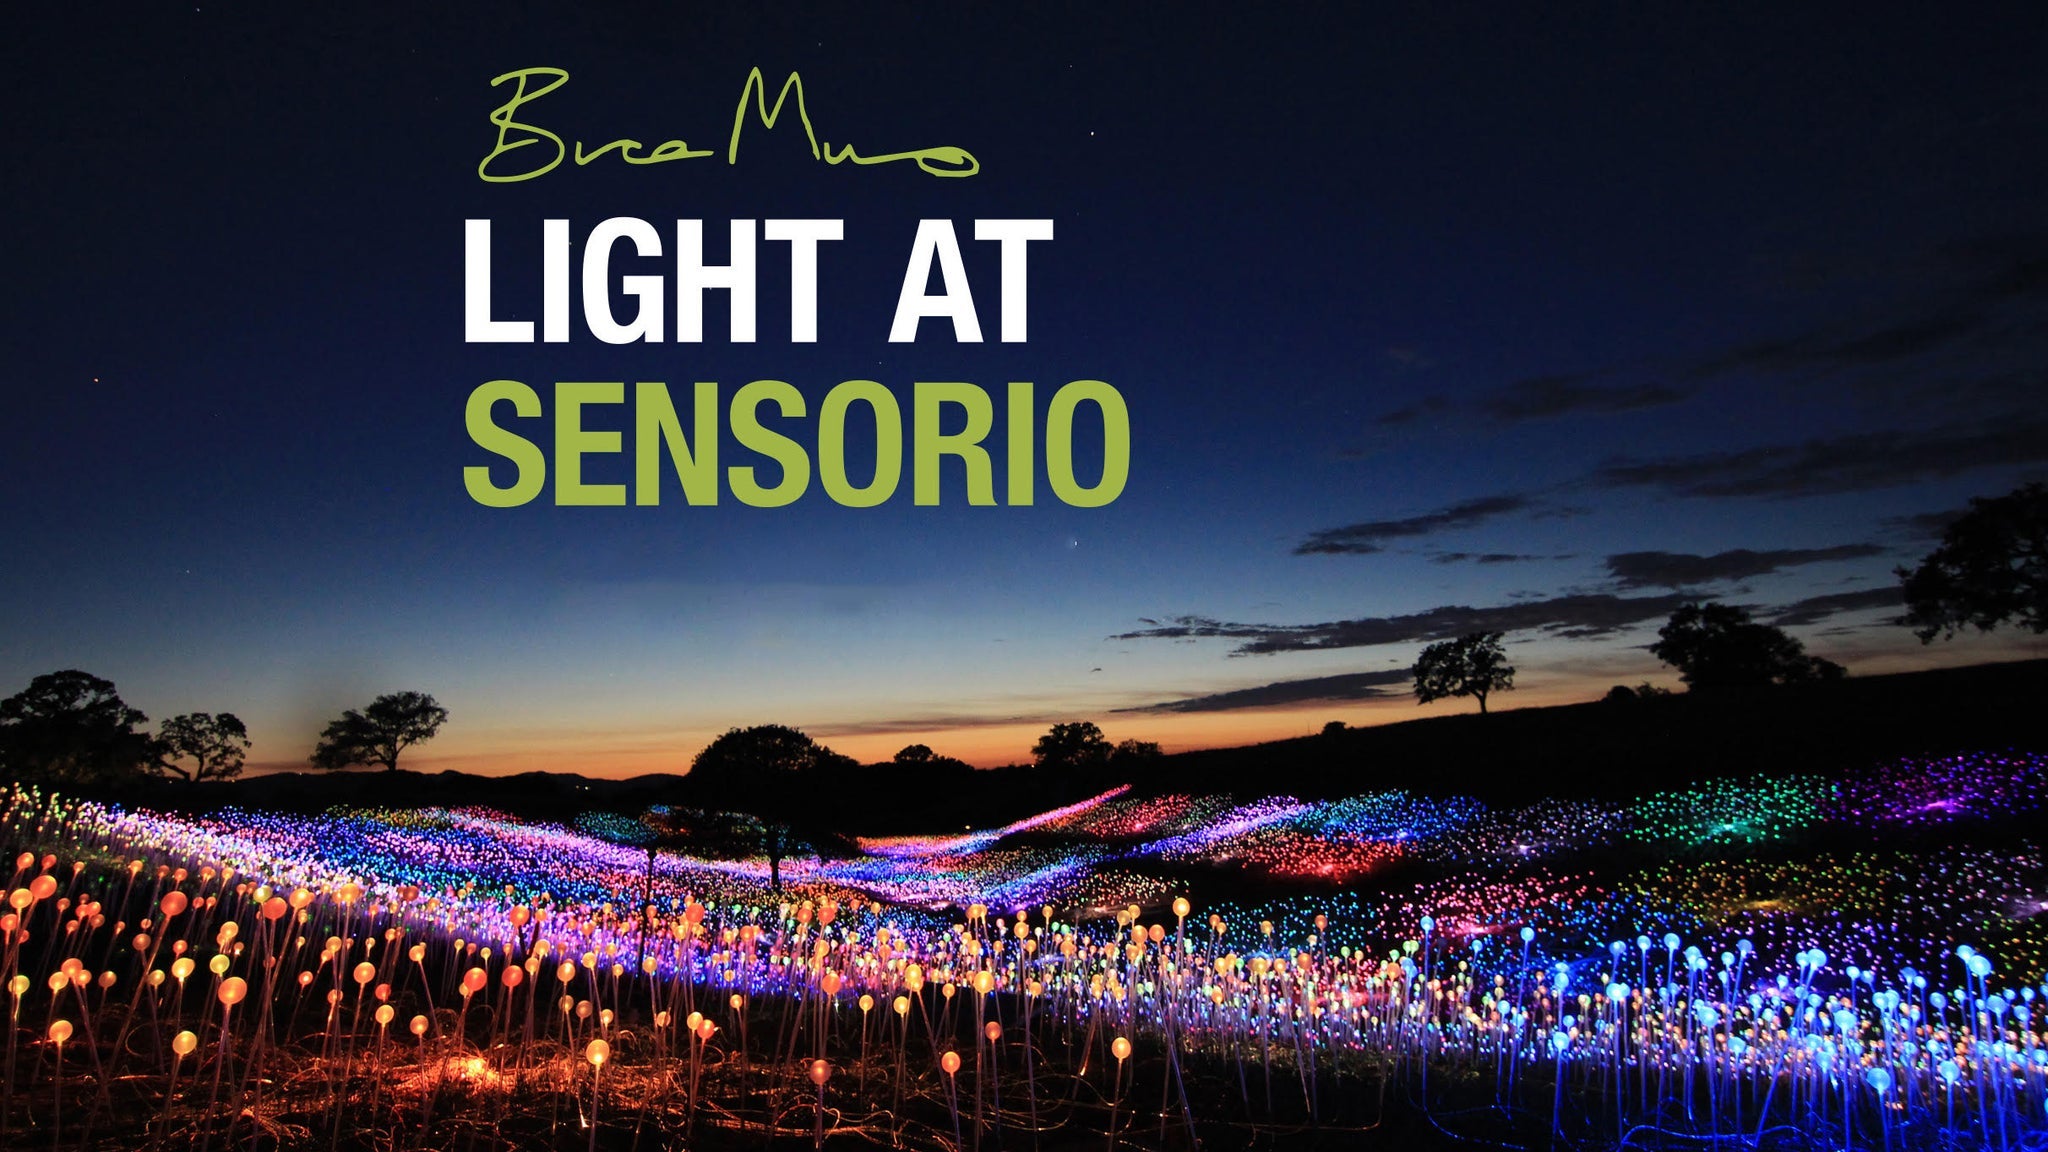 Bruce Munro: Light at Sensorio at Sensorio